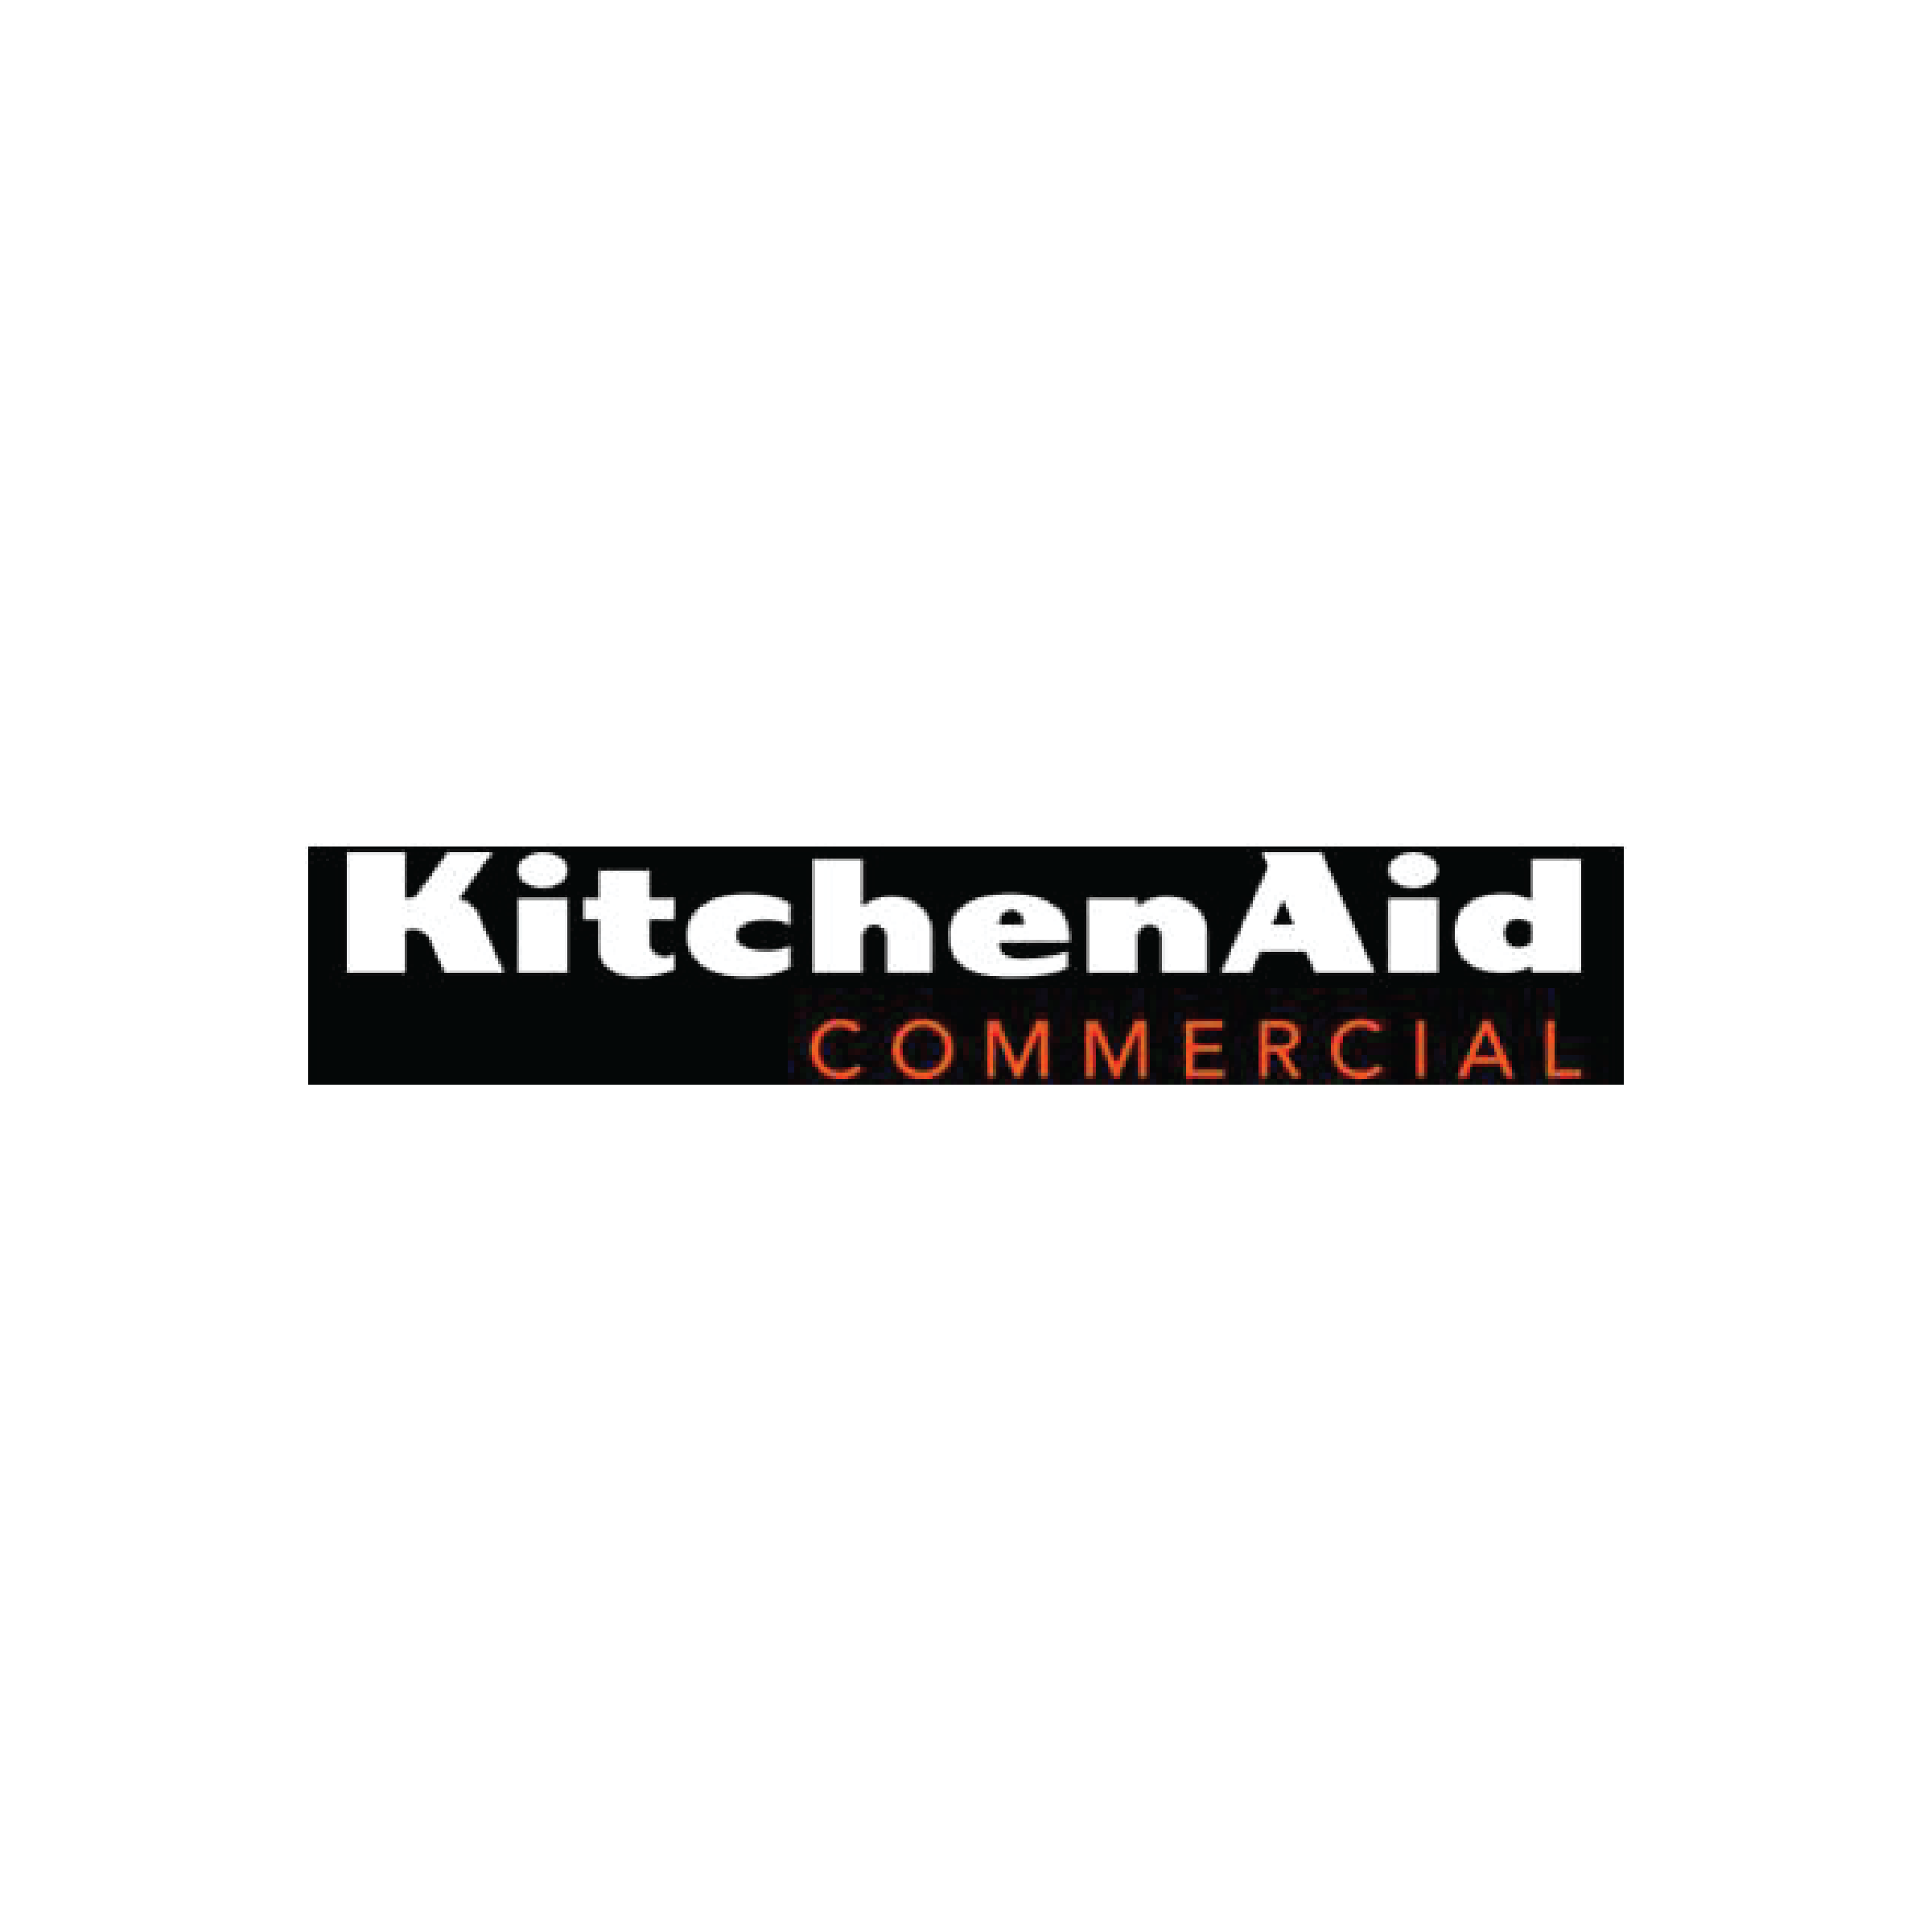 Nefem-Silver-Logos-_KitchenAid.png